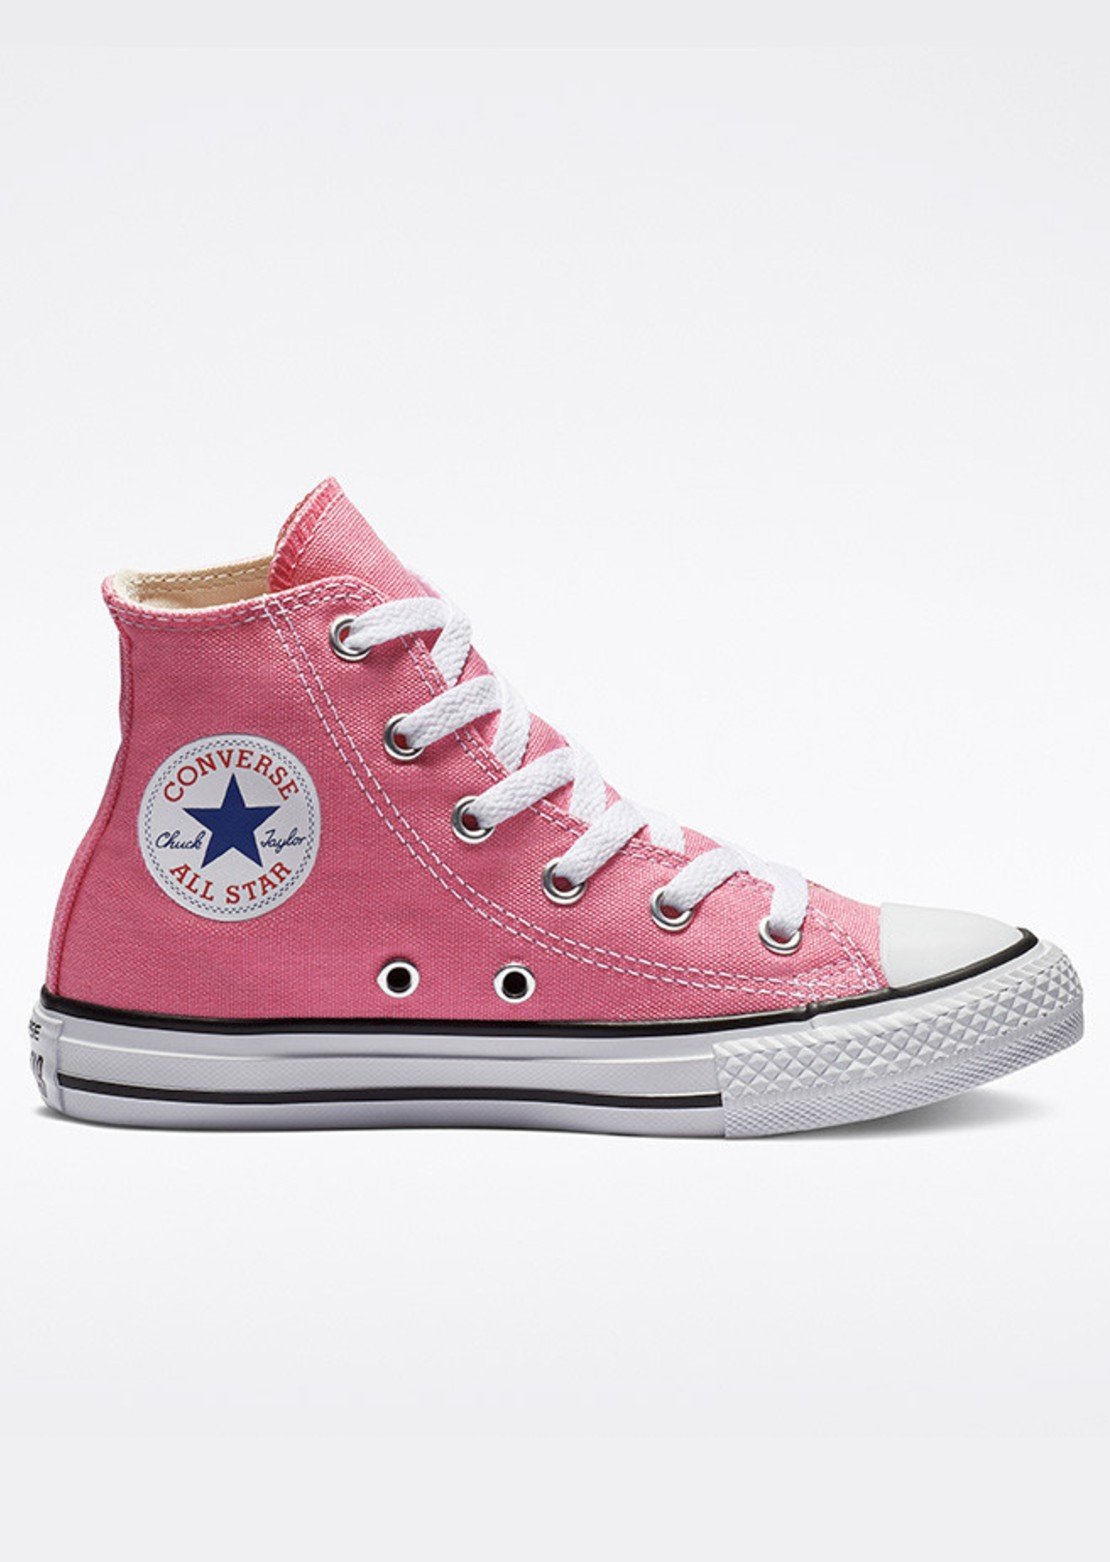 Converse Junior Chuck Taylor All Star HI Shoes Pink